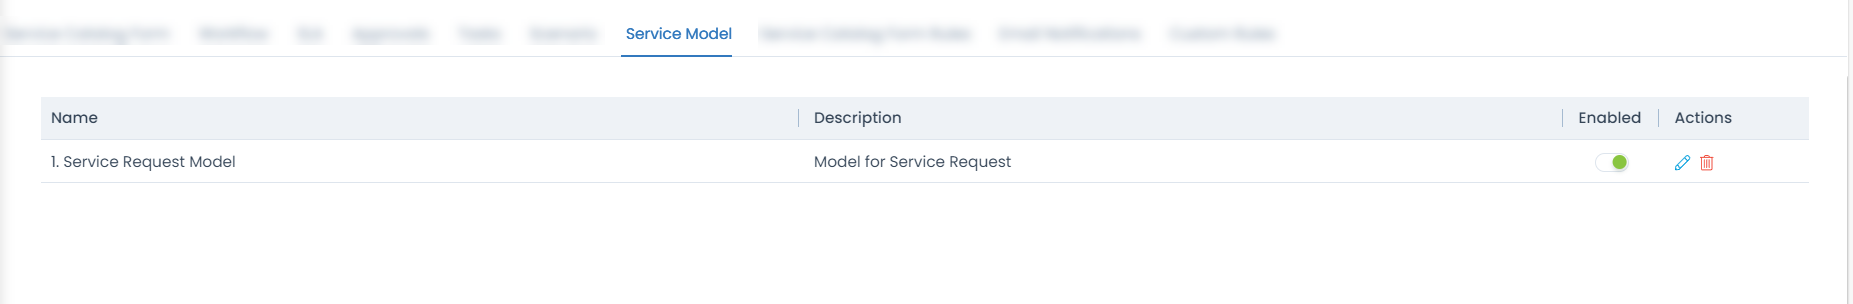 Service Model created